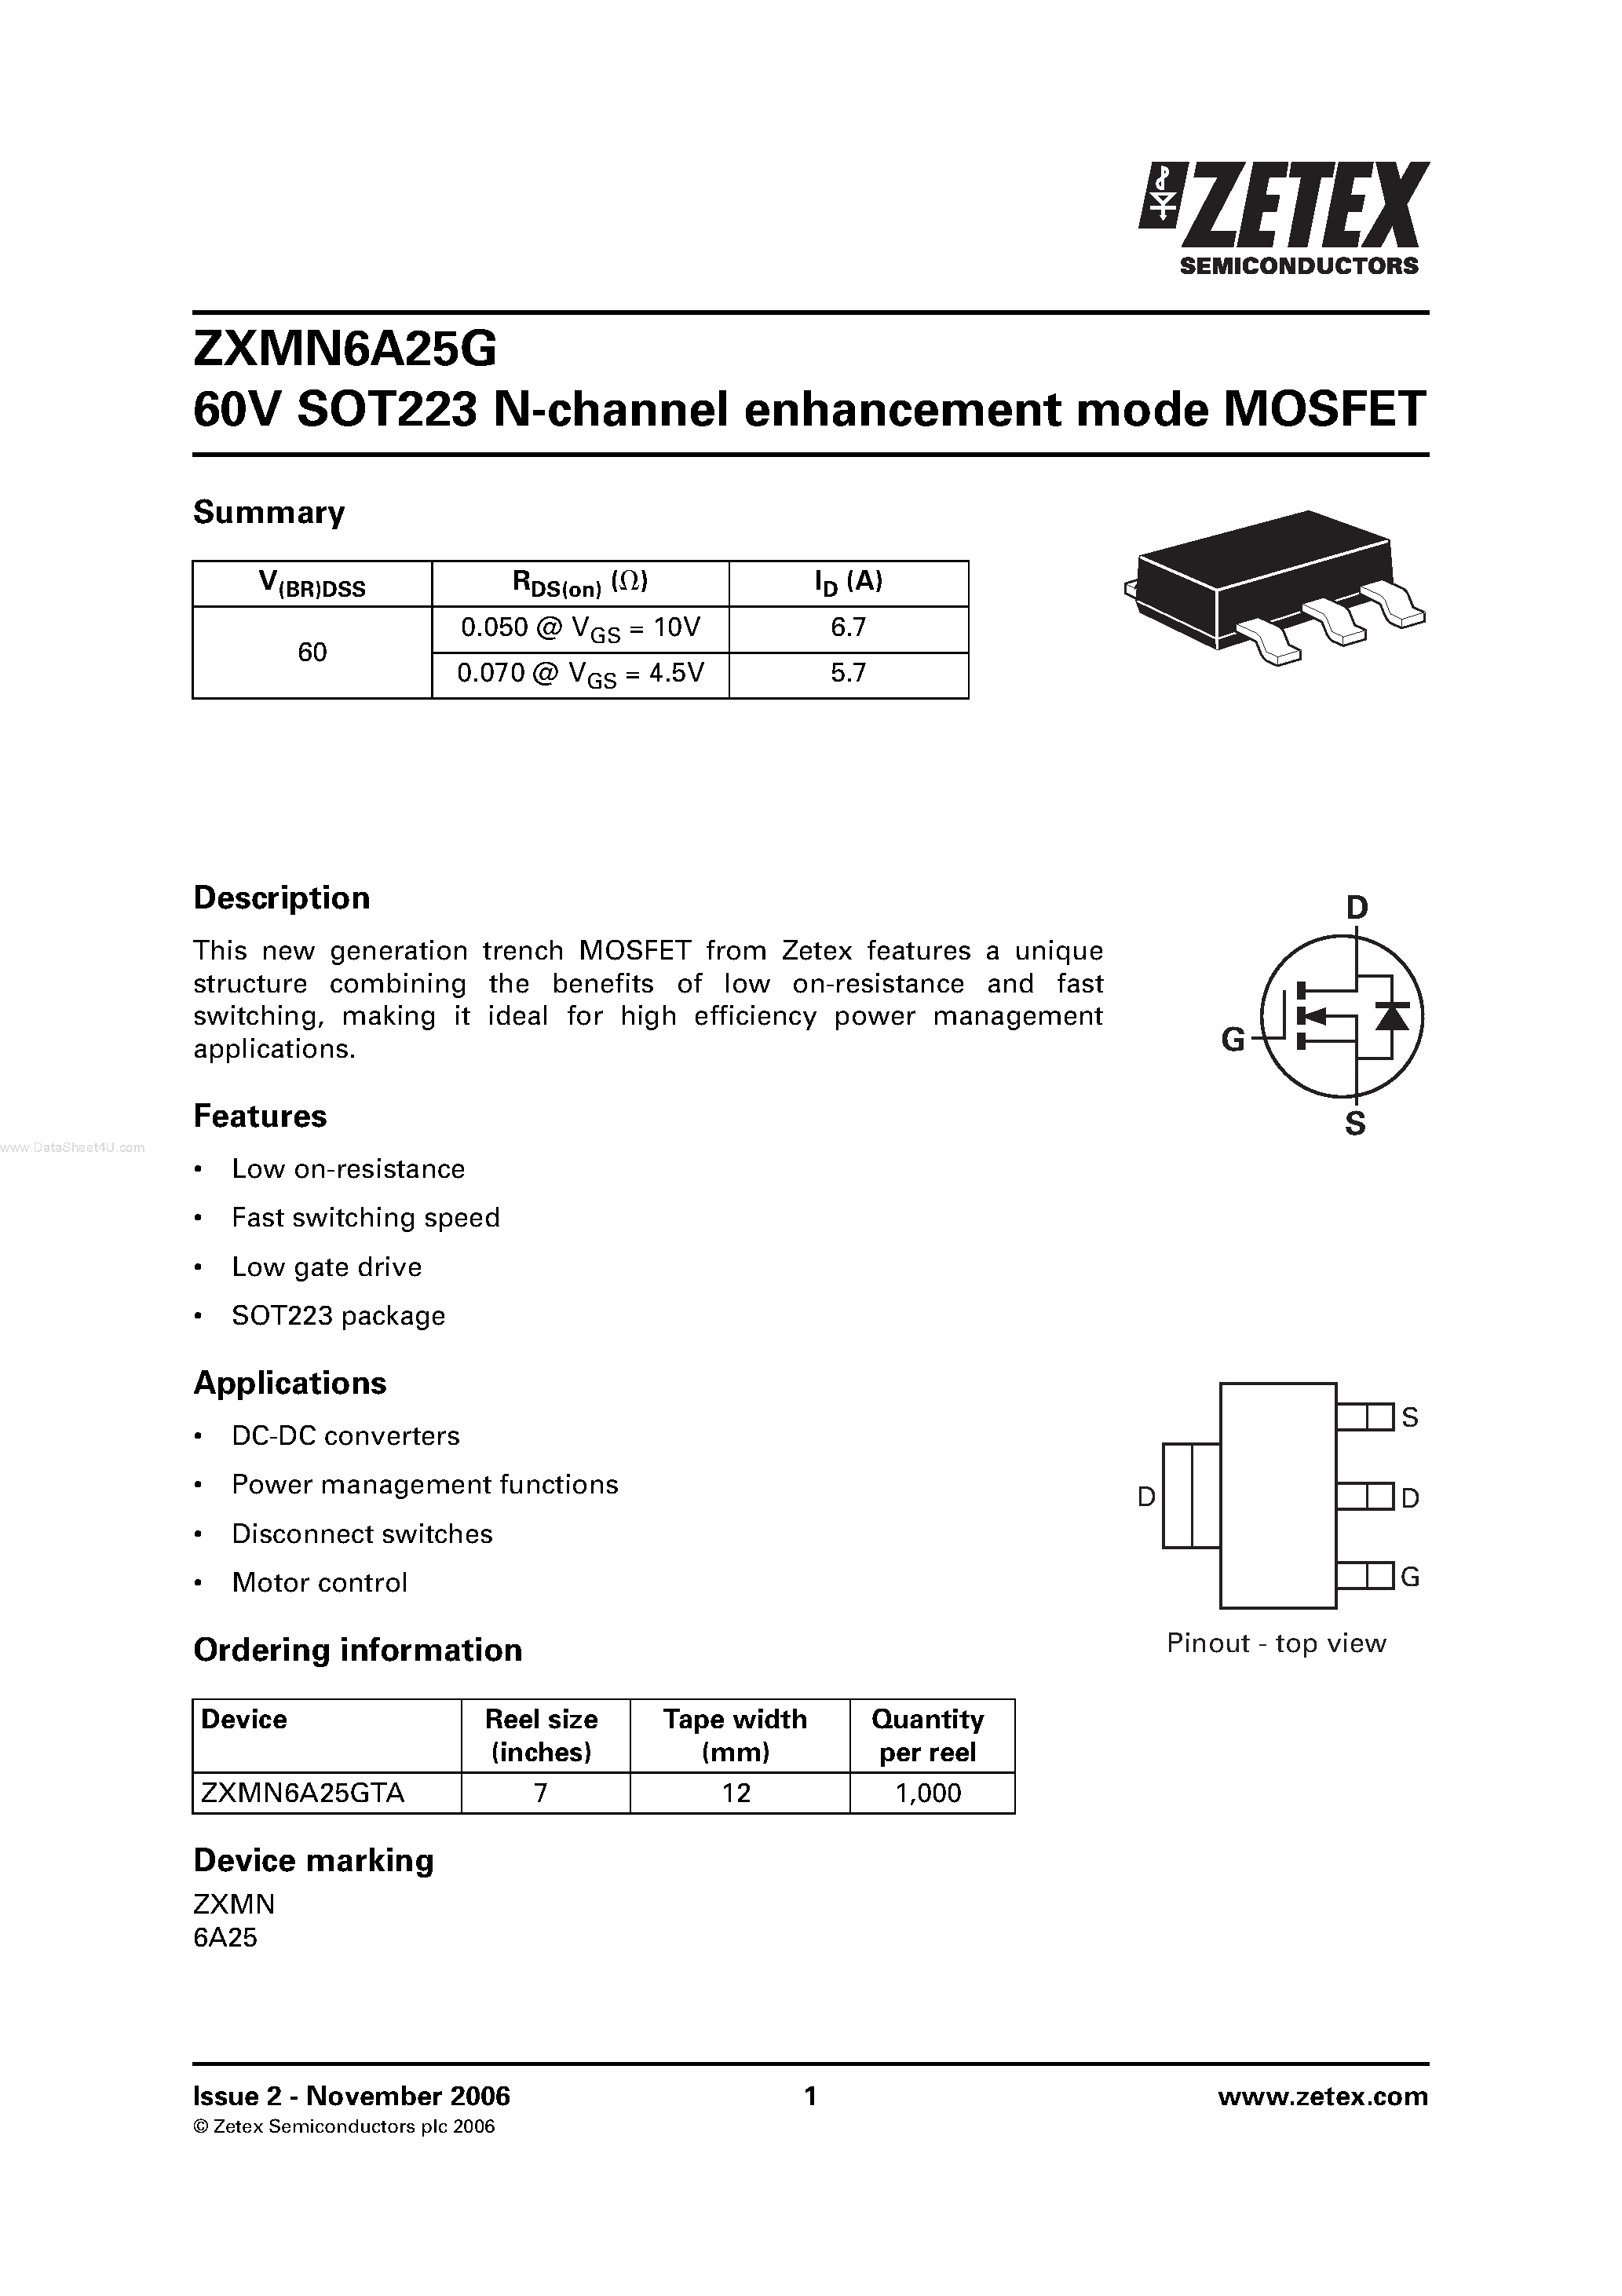 Datasheet ZXMN6A25G - 60V SOT223 N-channel enhancement mode MOSFET page 1